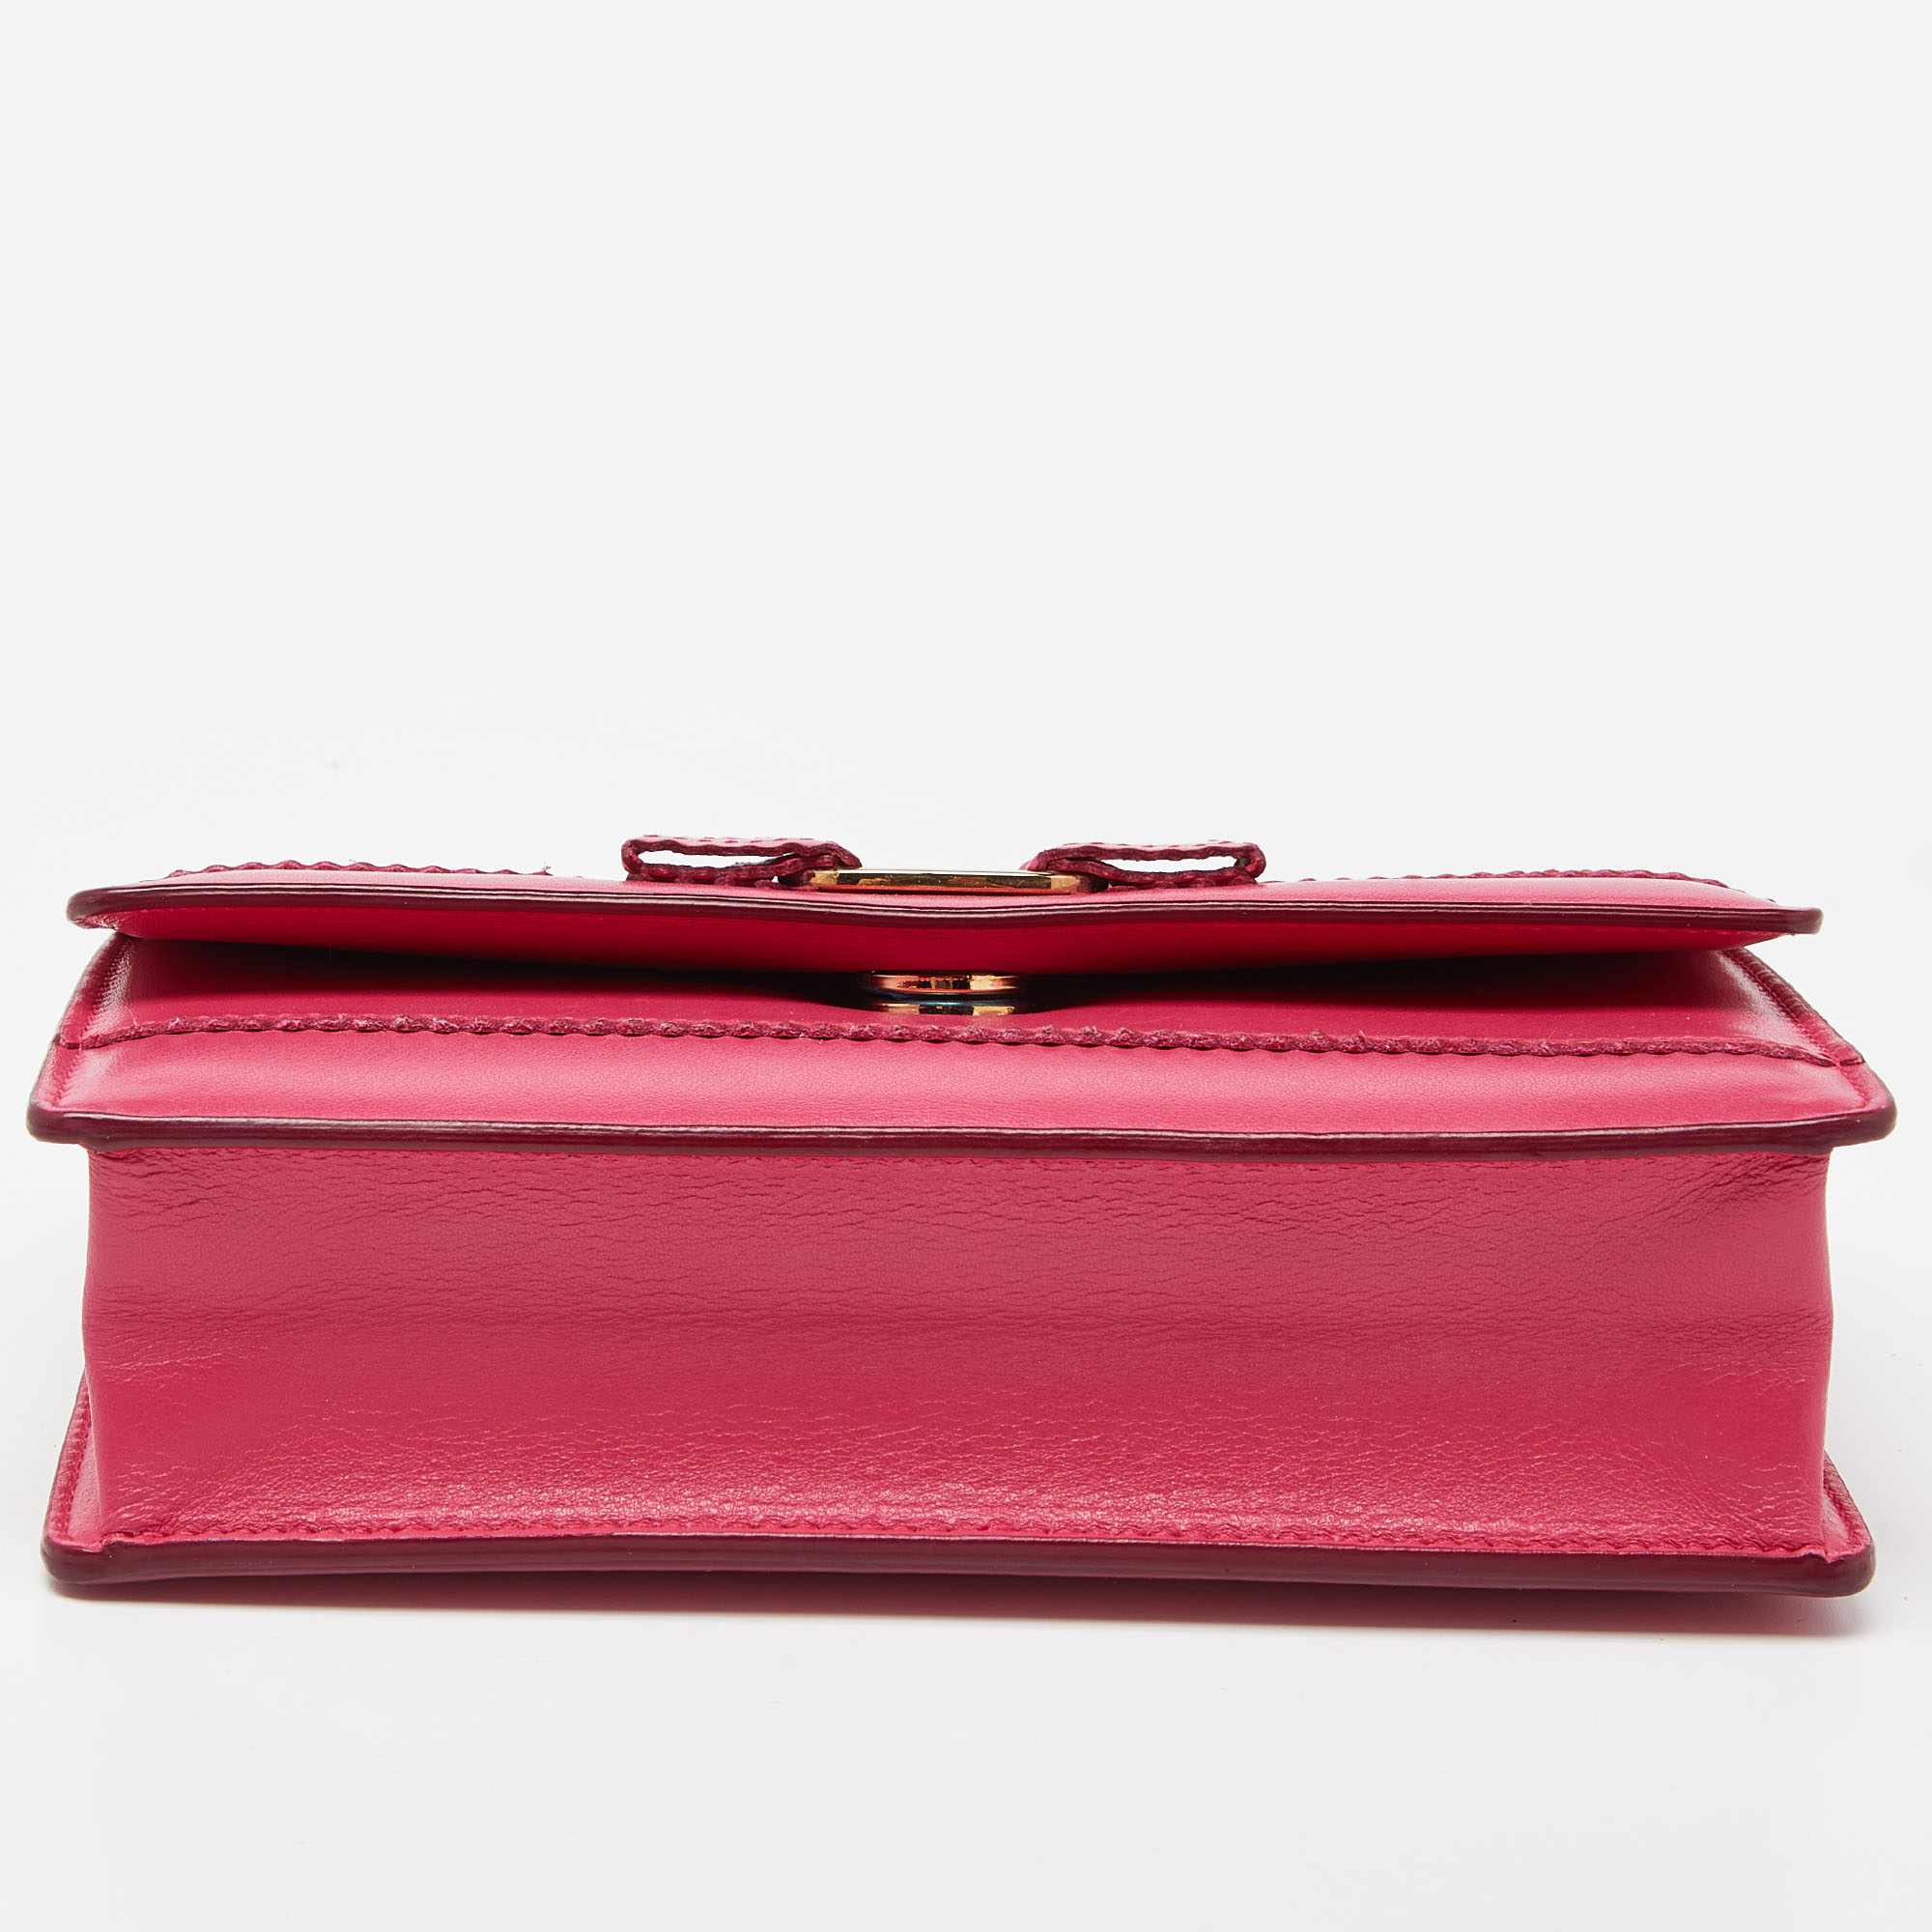 Salvatore Ferragamo Pink Leather Ginny Shoulder Bag